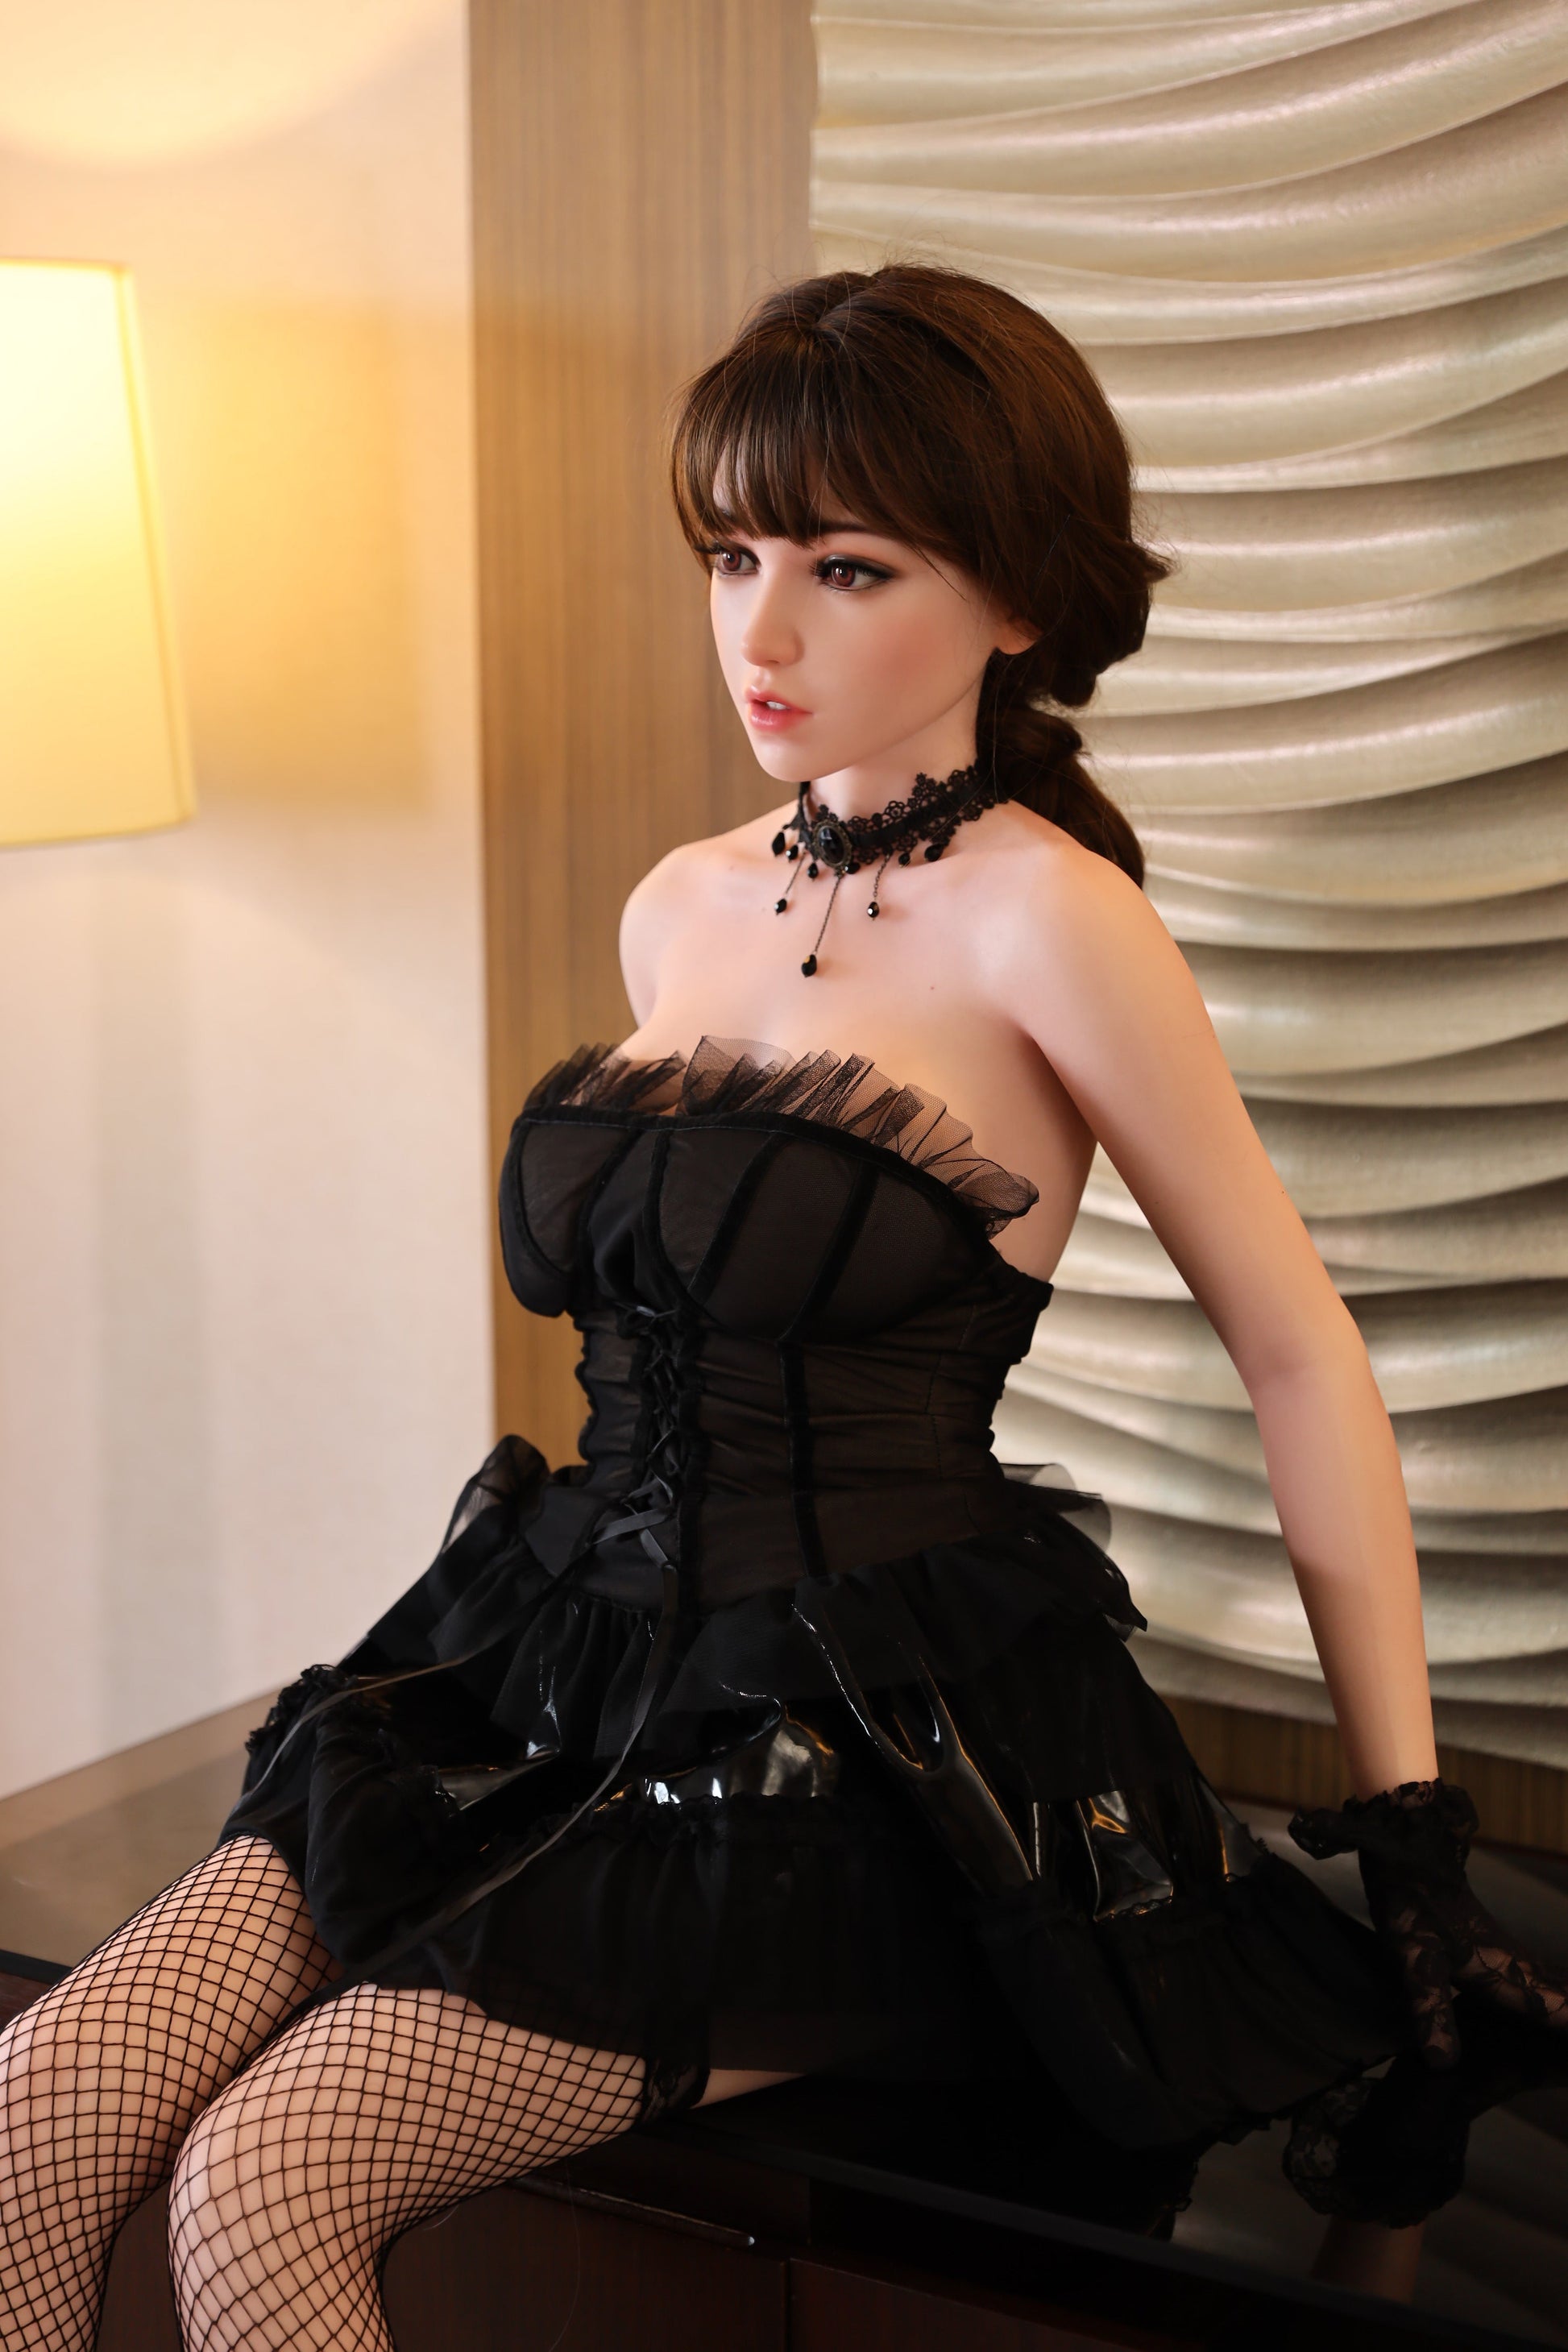 Gynoid Model 9 - Elina - Love Dolls 4U